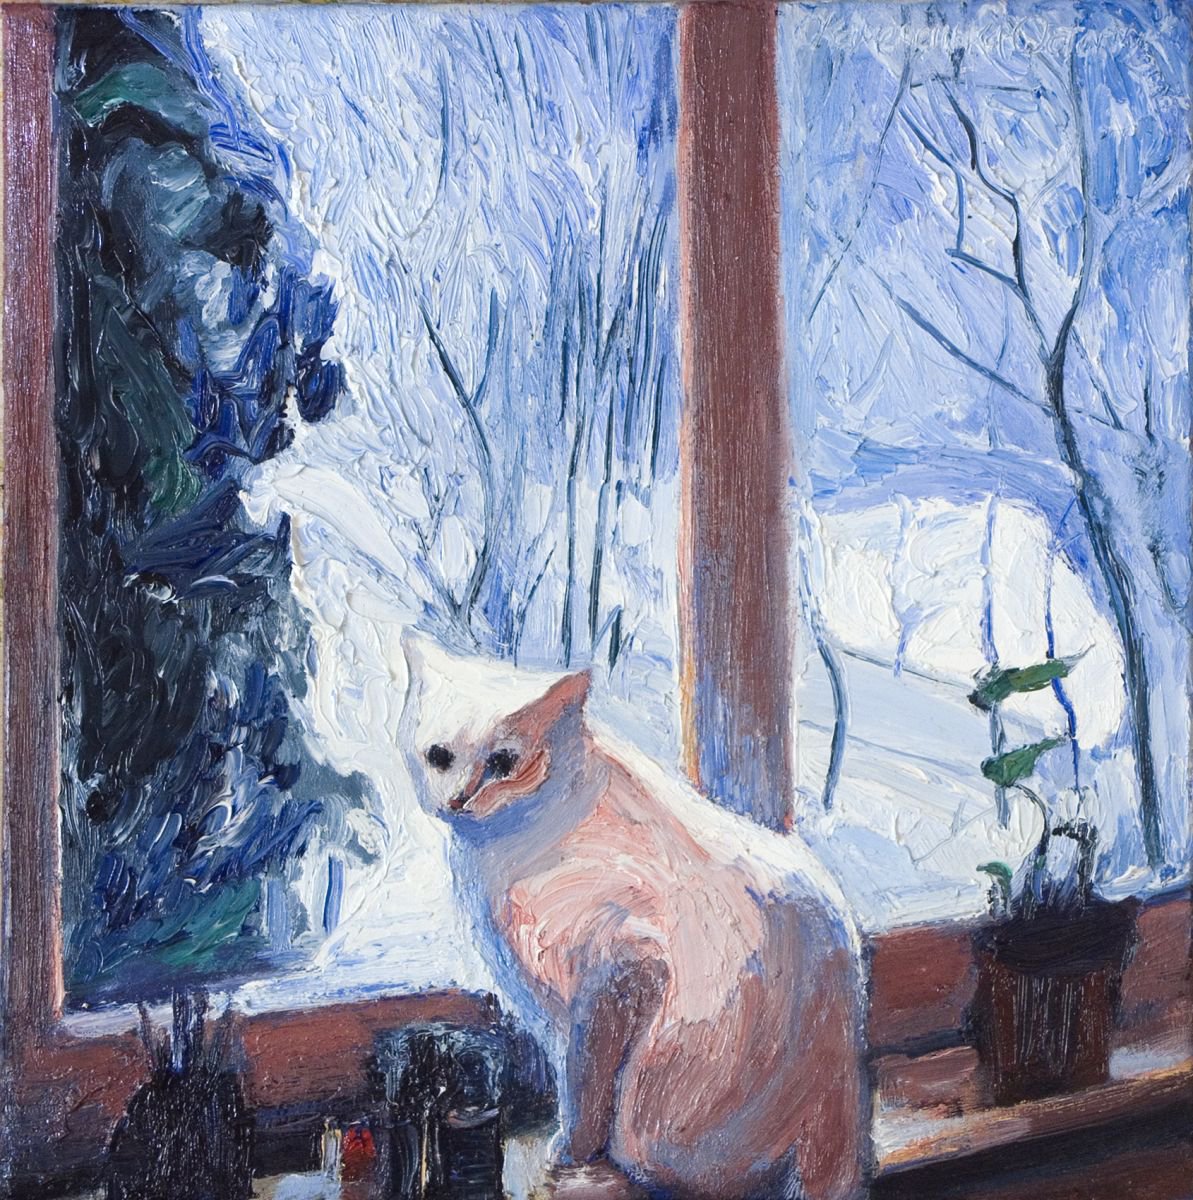 Cat is looking on the winter by Olena Kamenetska-Ostapchuk